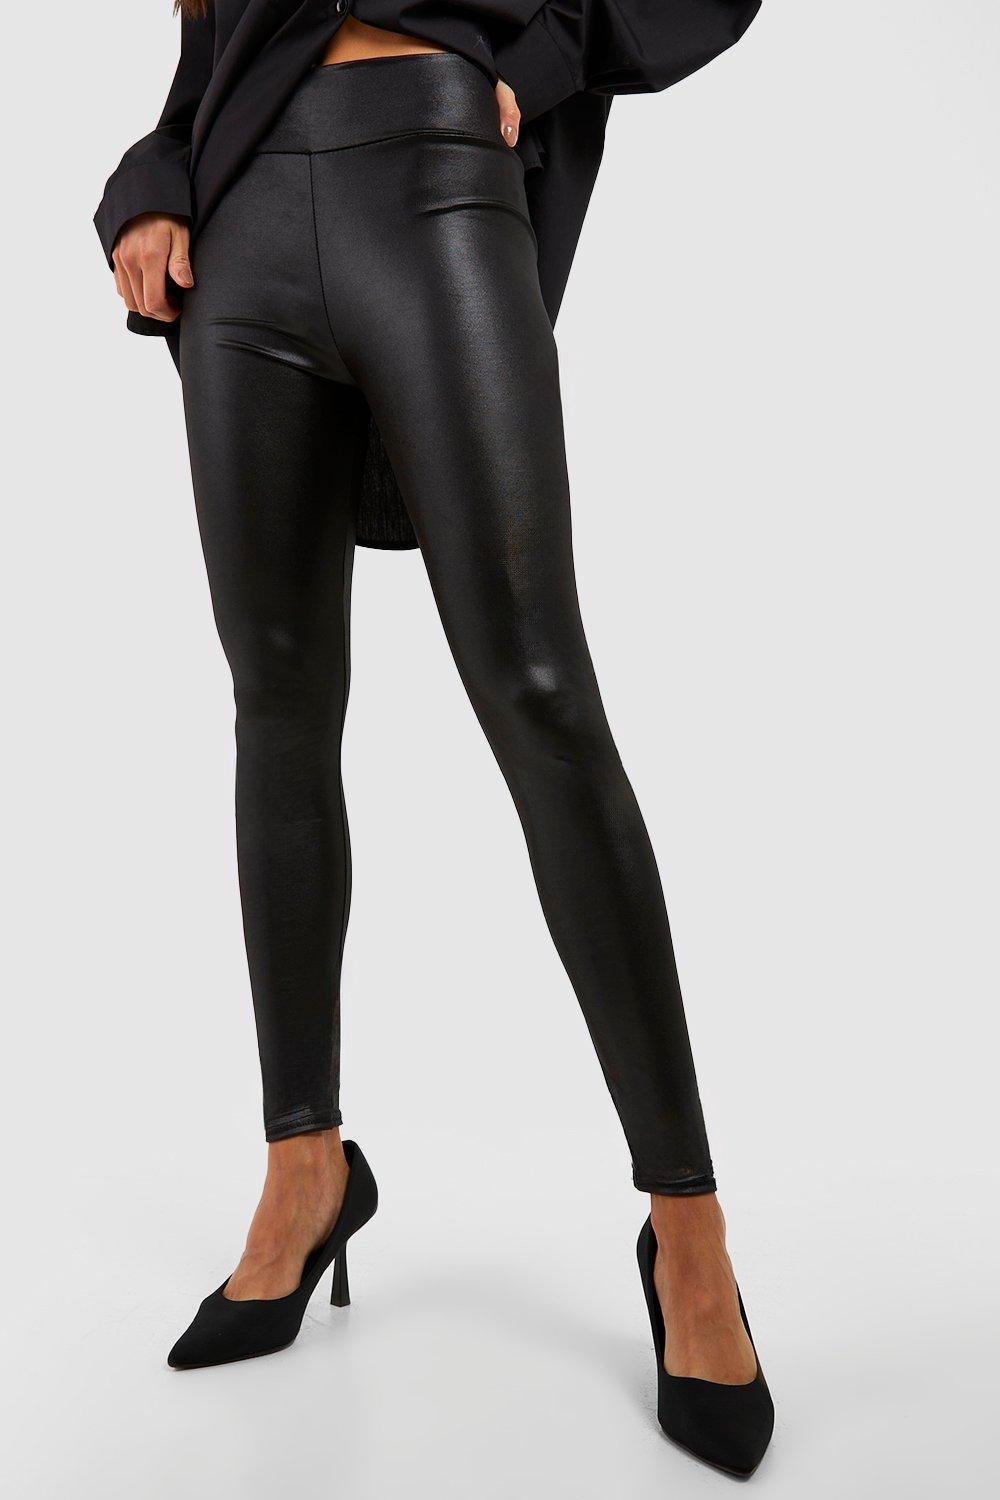 black shiny leggings,Save up to 15%